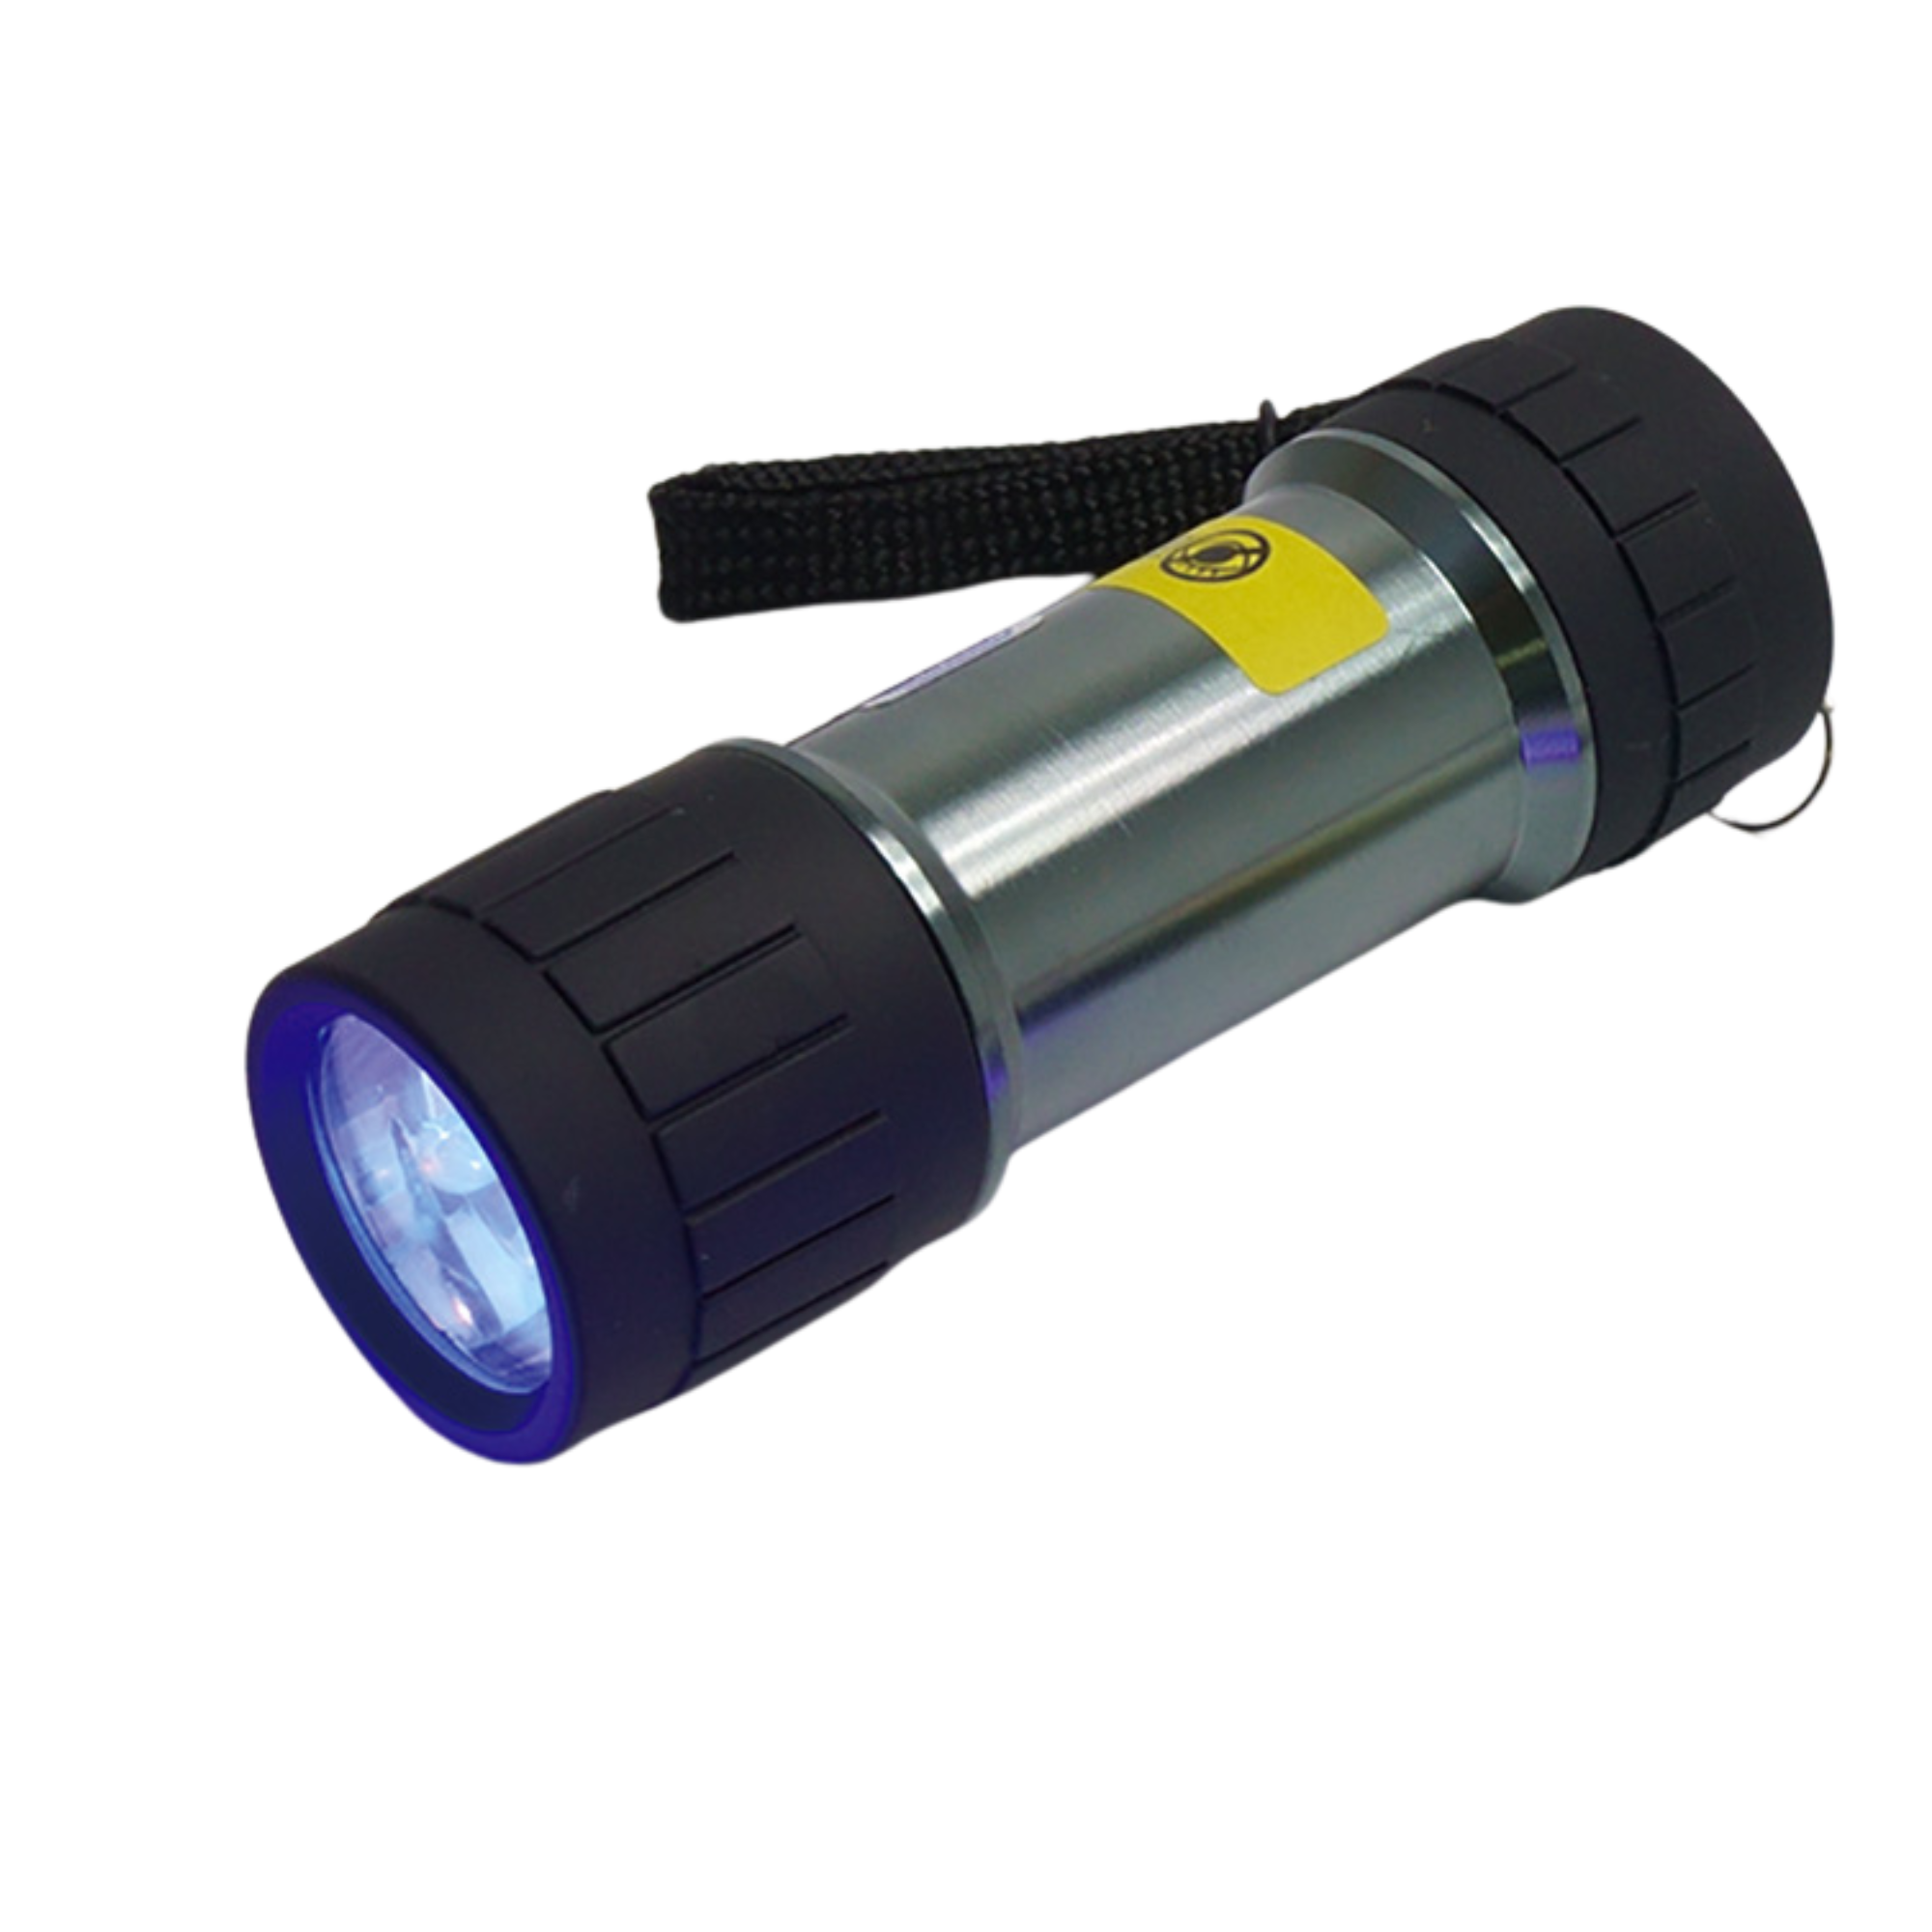 Portable LW UV light source by Alfa Mirage